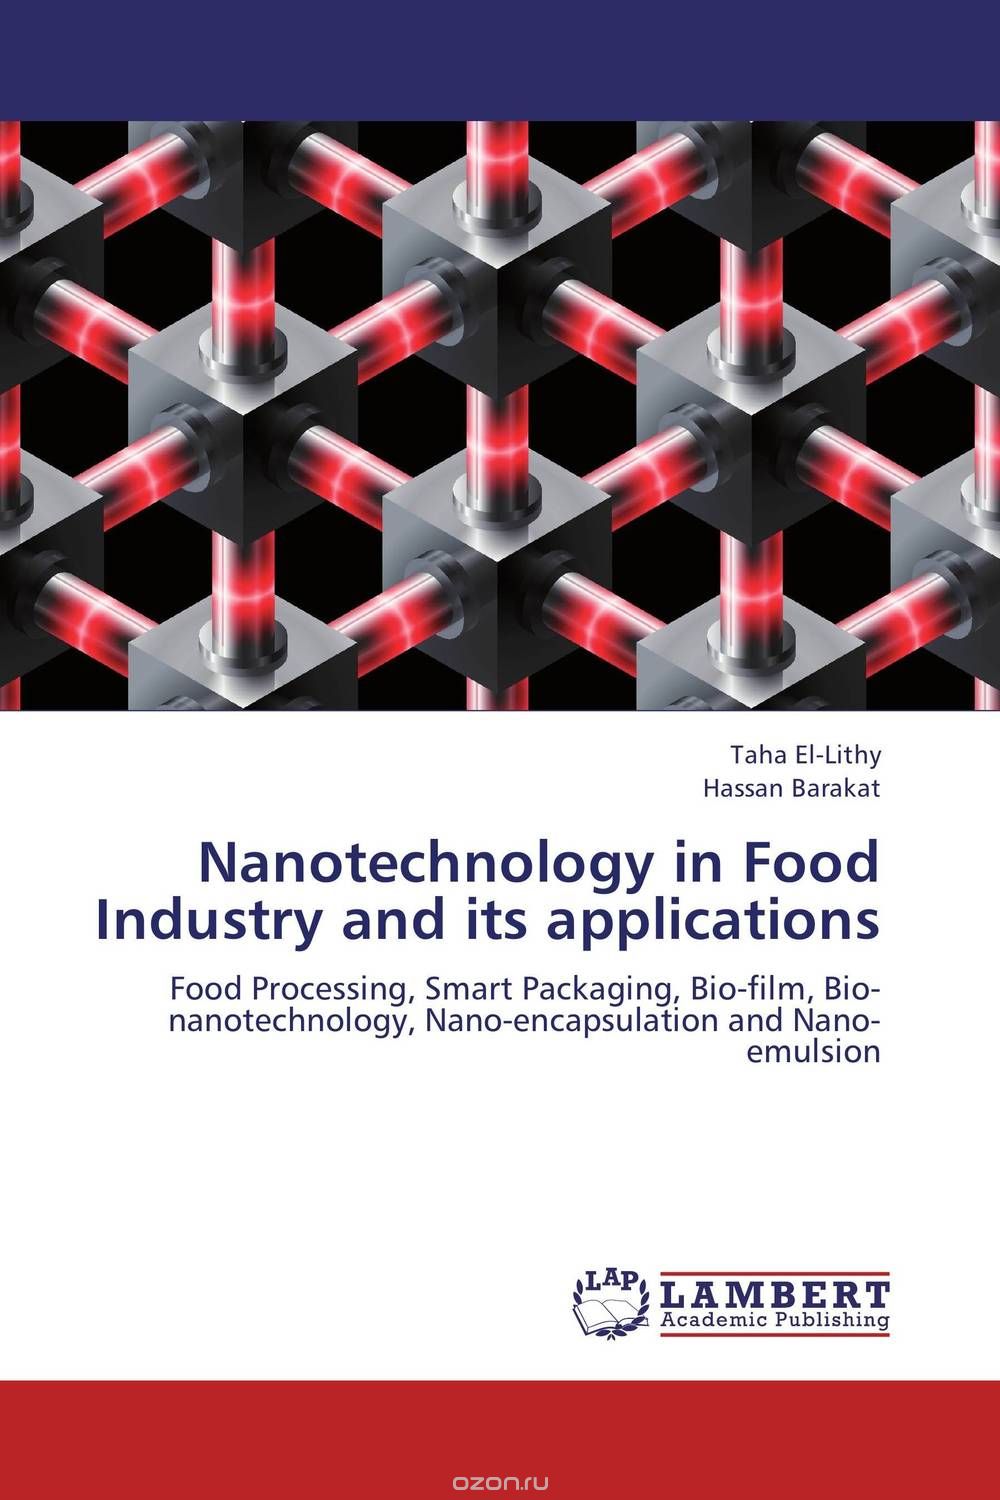 Скачать книгу "Nanotechnology in Food Industry and its applications"